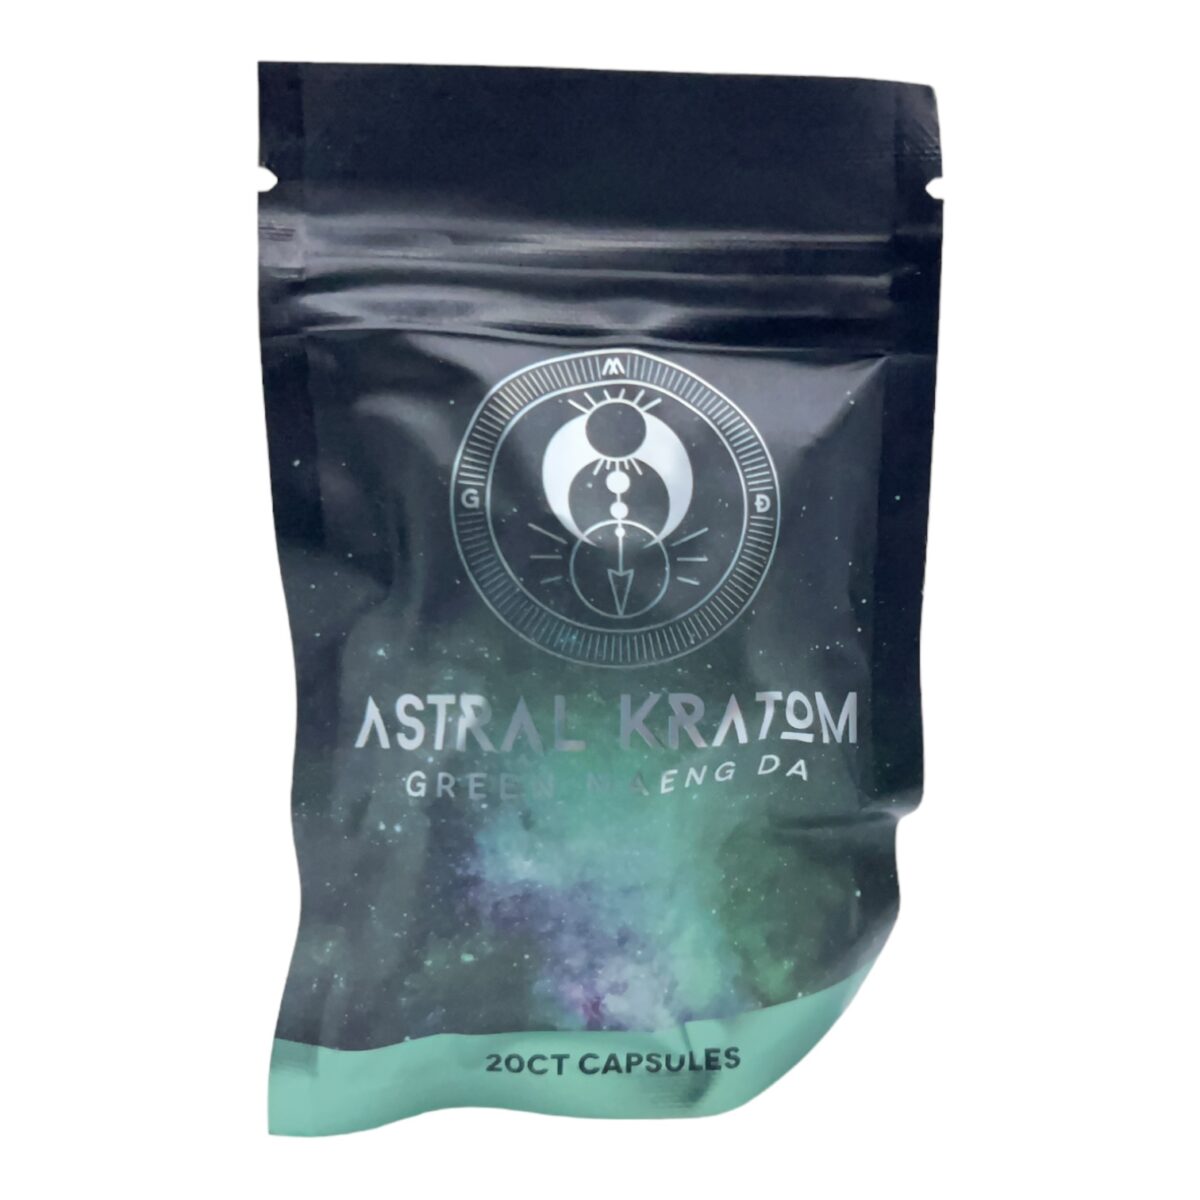 Astral Kratom Green Maeng Da – 20CT (FREE SAMPLE)